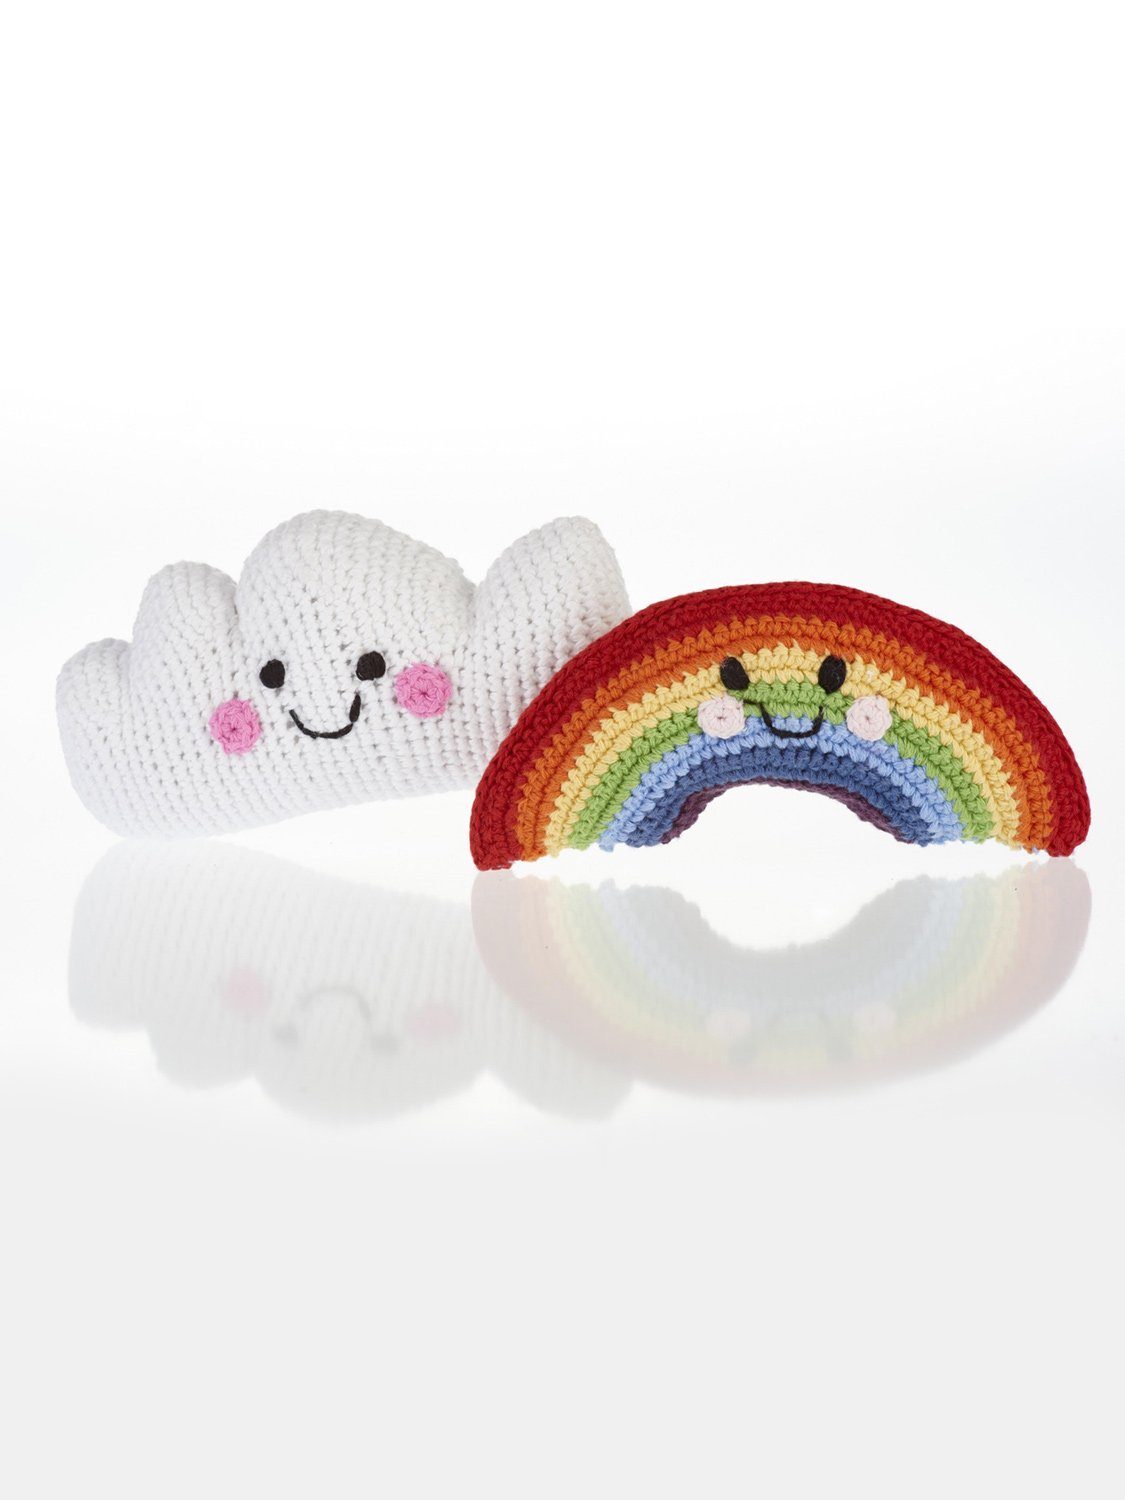 Smiley Cloud Crochet Fair Trade Rattle Toy Rattle Pebble Toys 